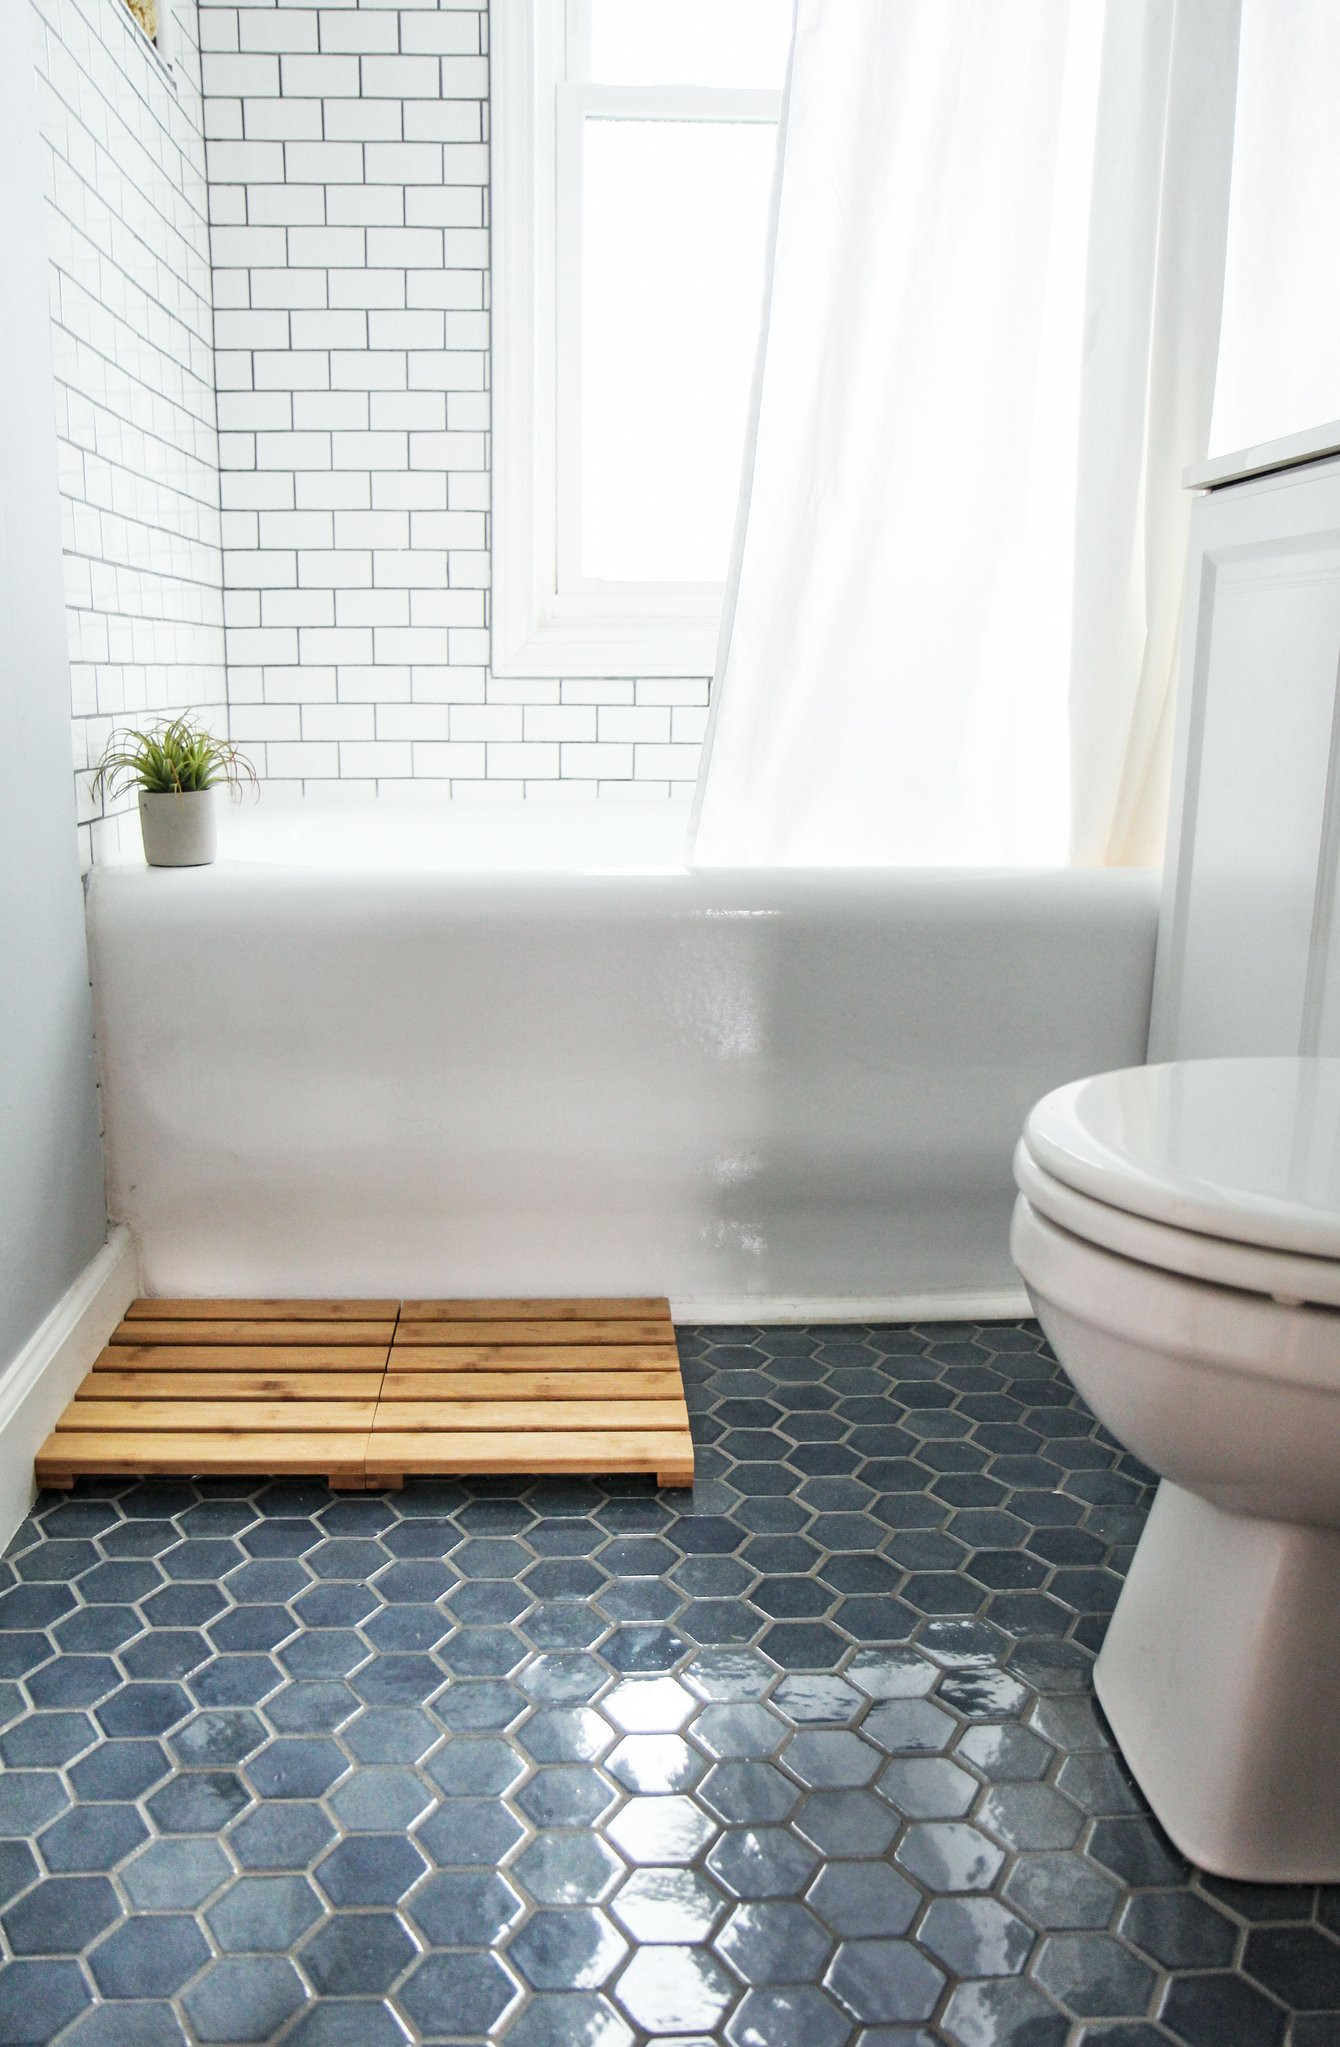 Hex Tiles Bathroom Floor
 8 Things I Learned During My Bathroom Tile Renovation